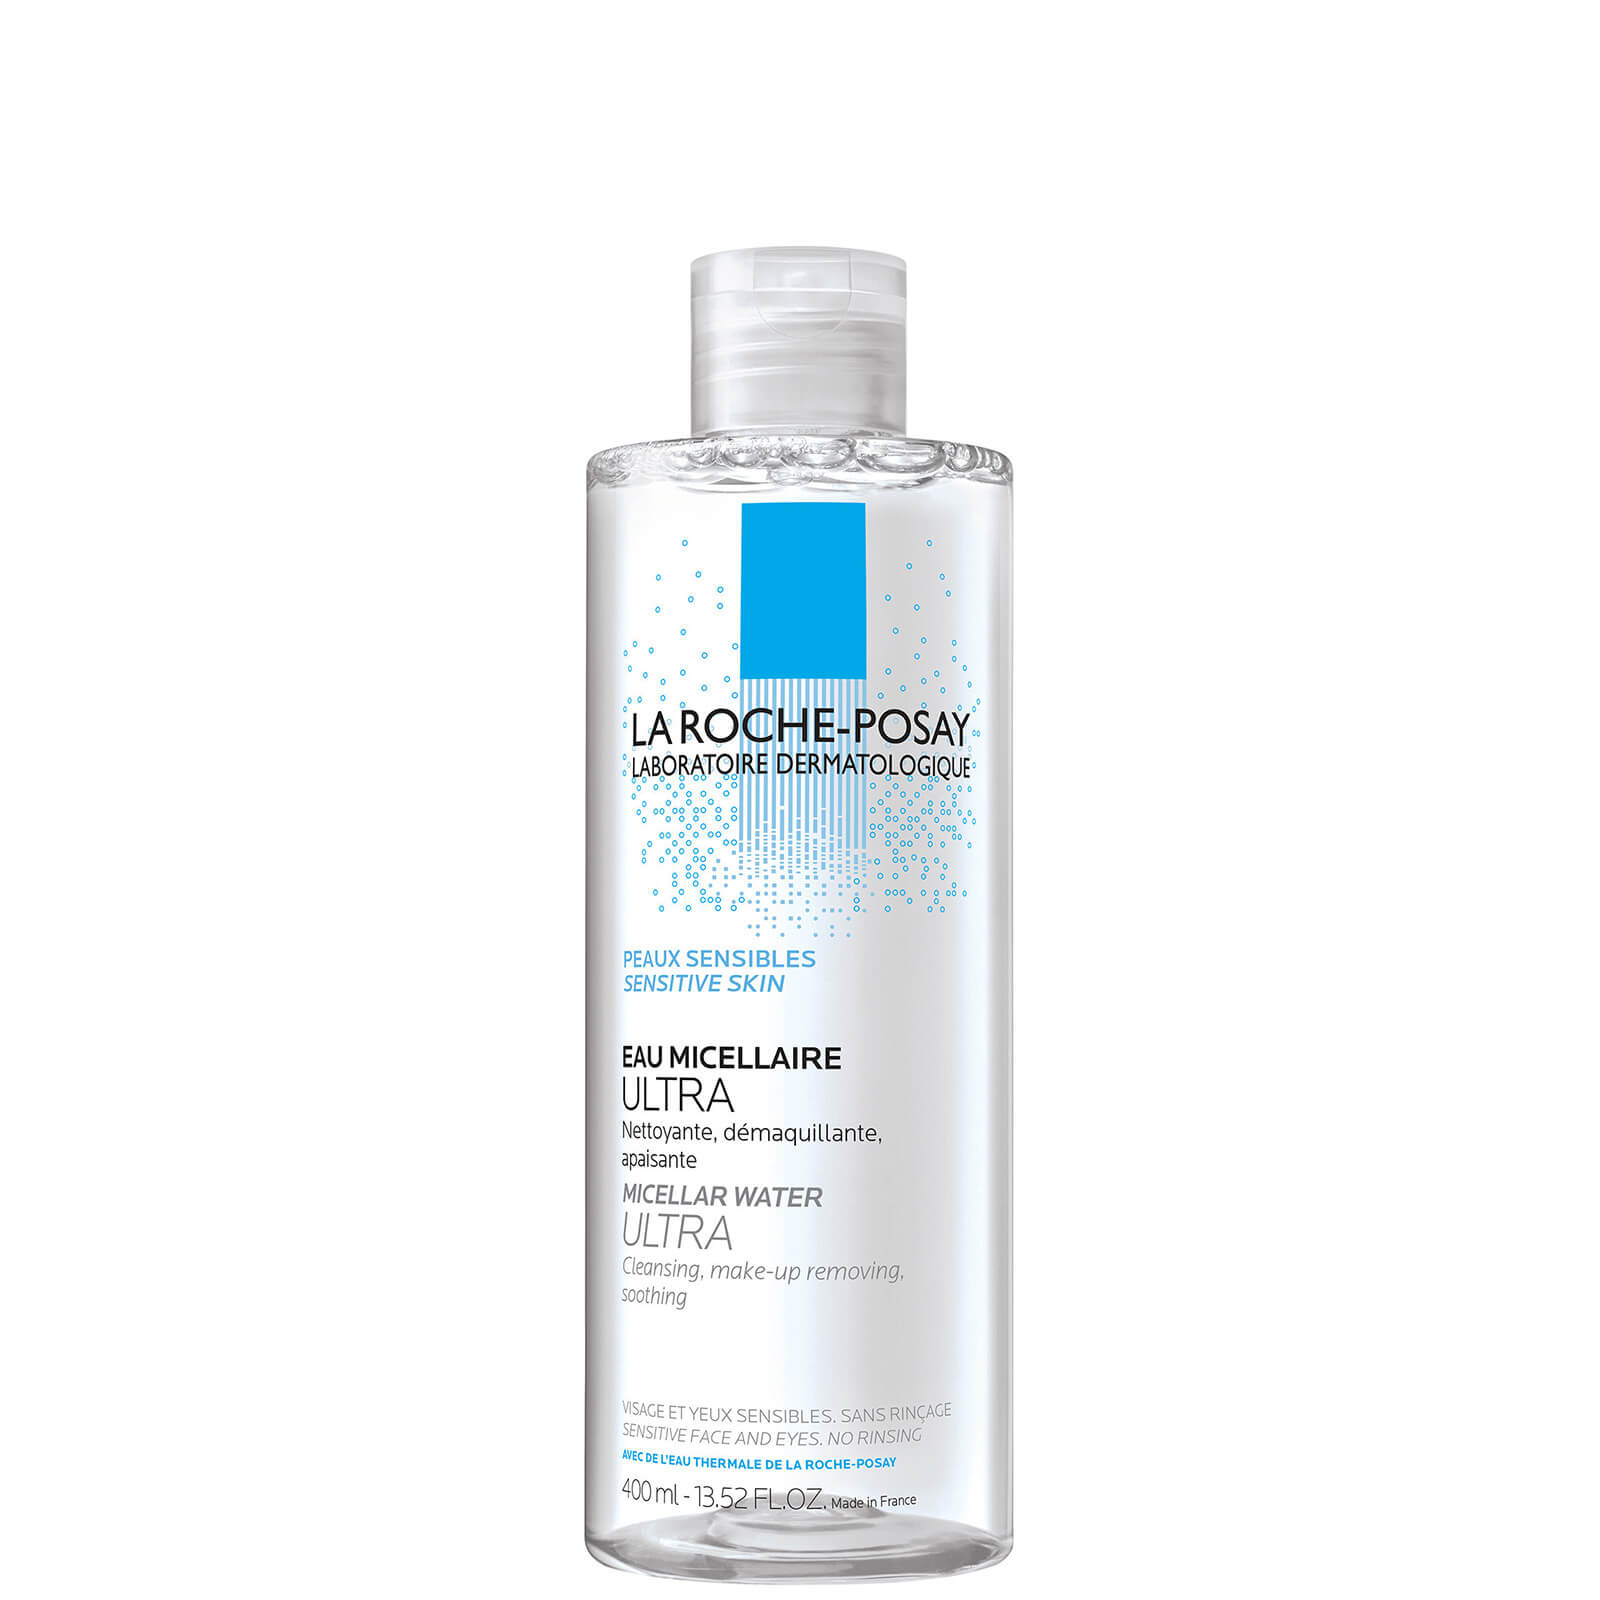 La Roche-posay Micellar Water Ultra For Sensitive Skin (13.52 Fl. Oz.) - 13.52 Fl. Oz.